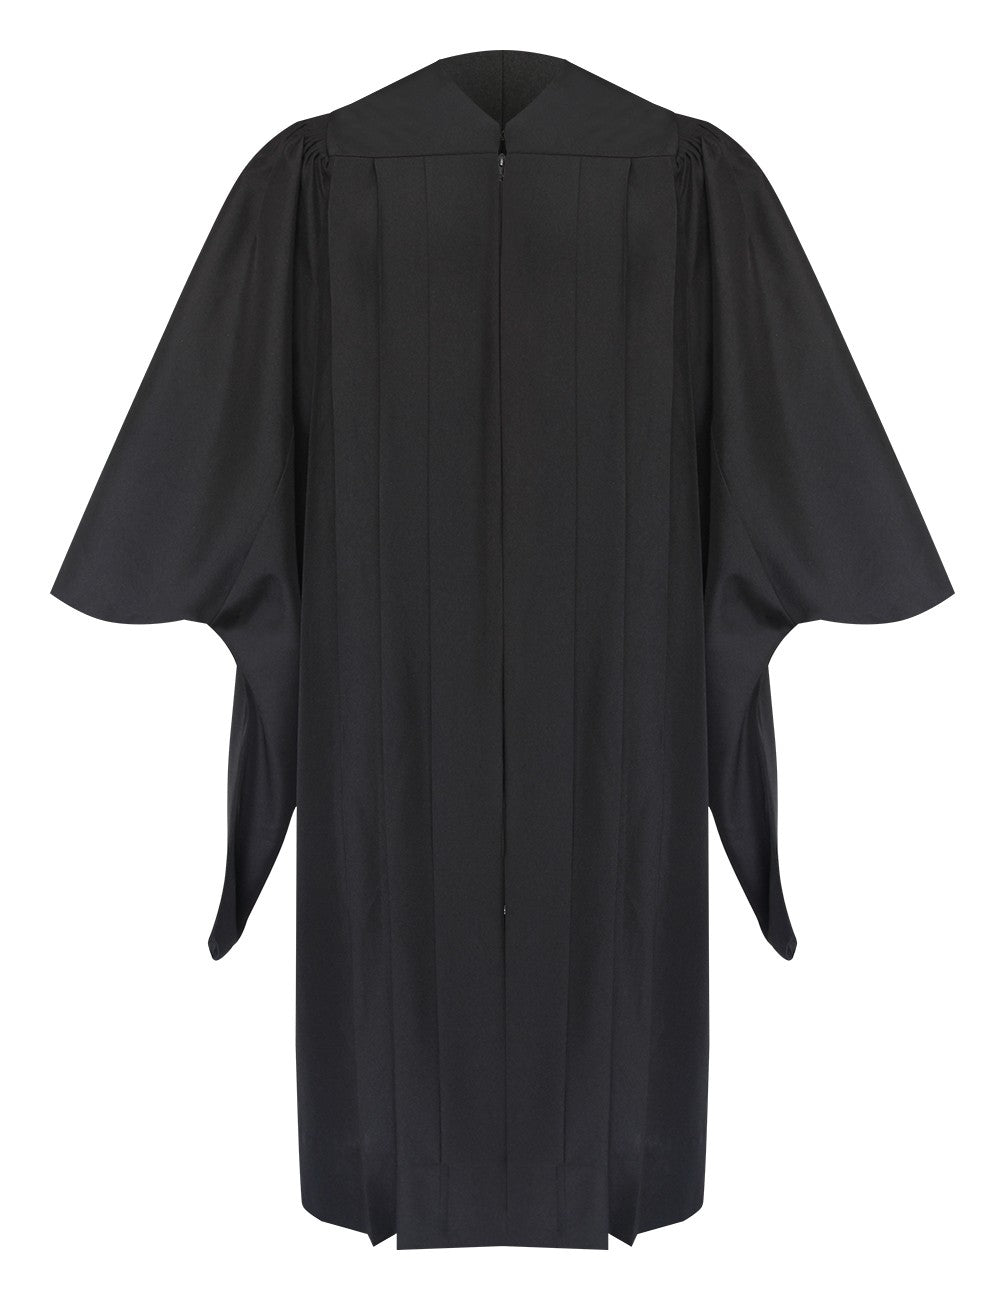 Deluxe Masters Graduation Gown - Academic Regalia - Graduation Cap and Gown